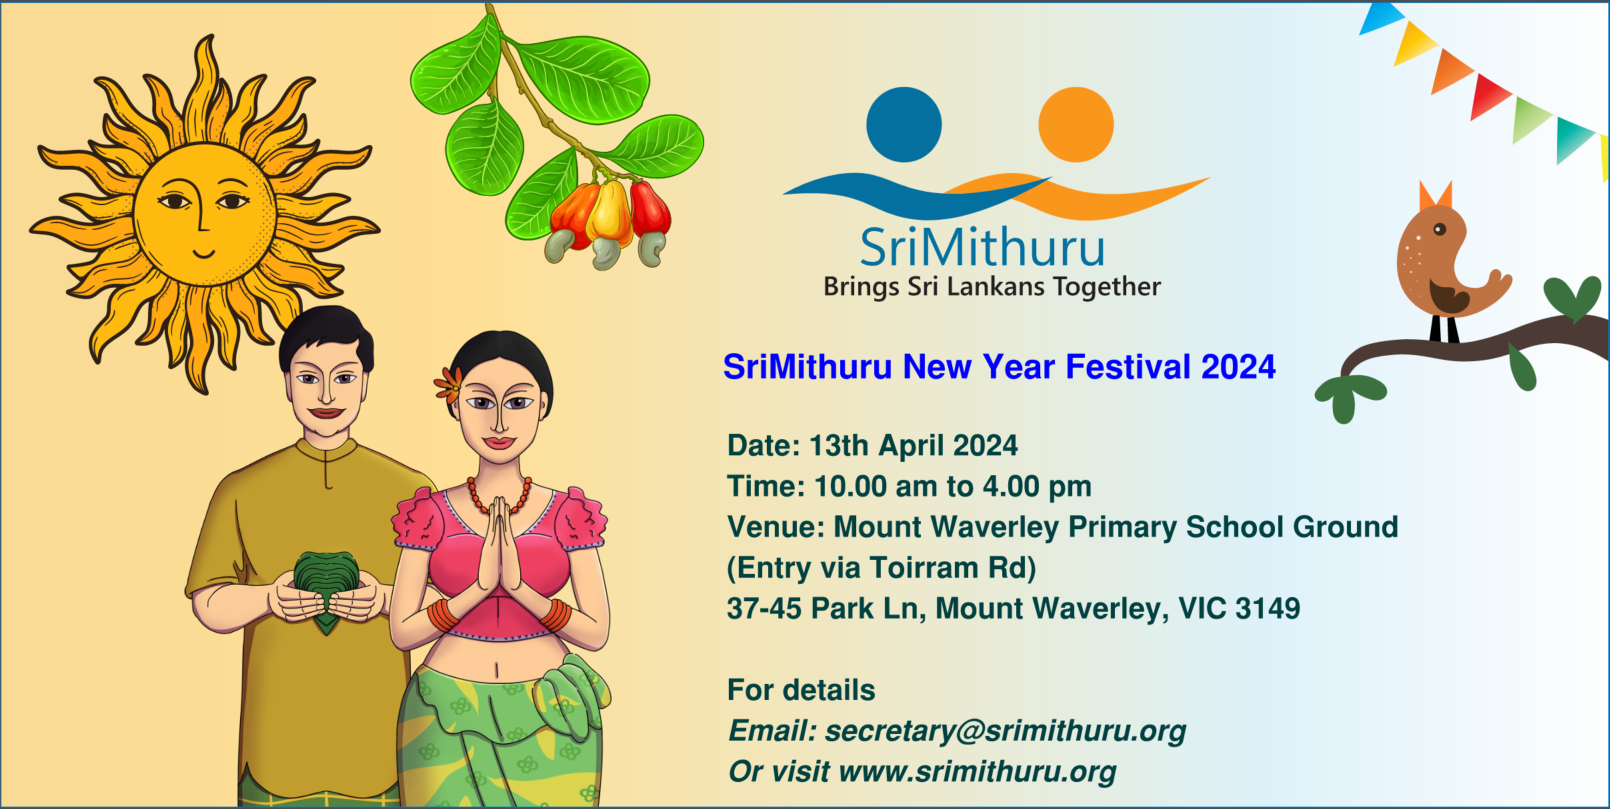 Sri Mithuru New Year Festival 2024